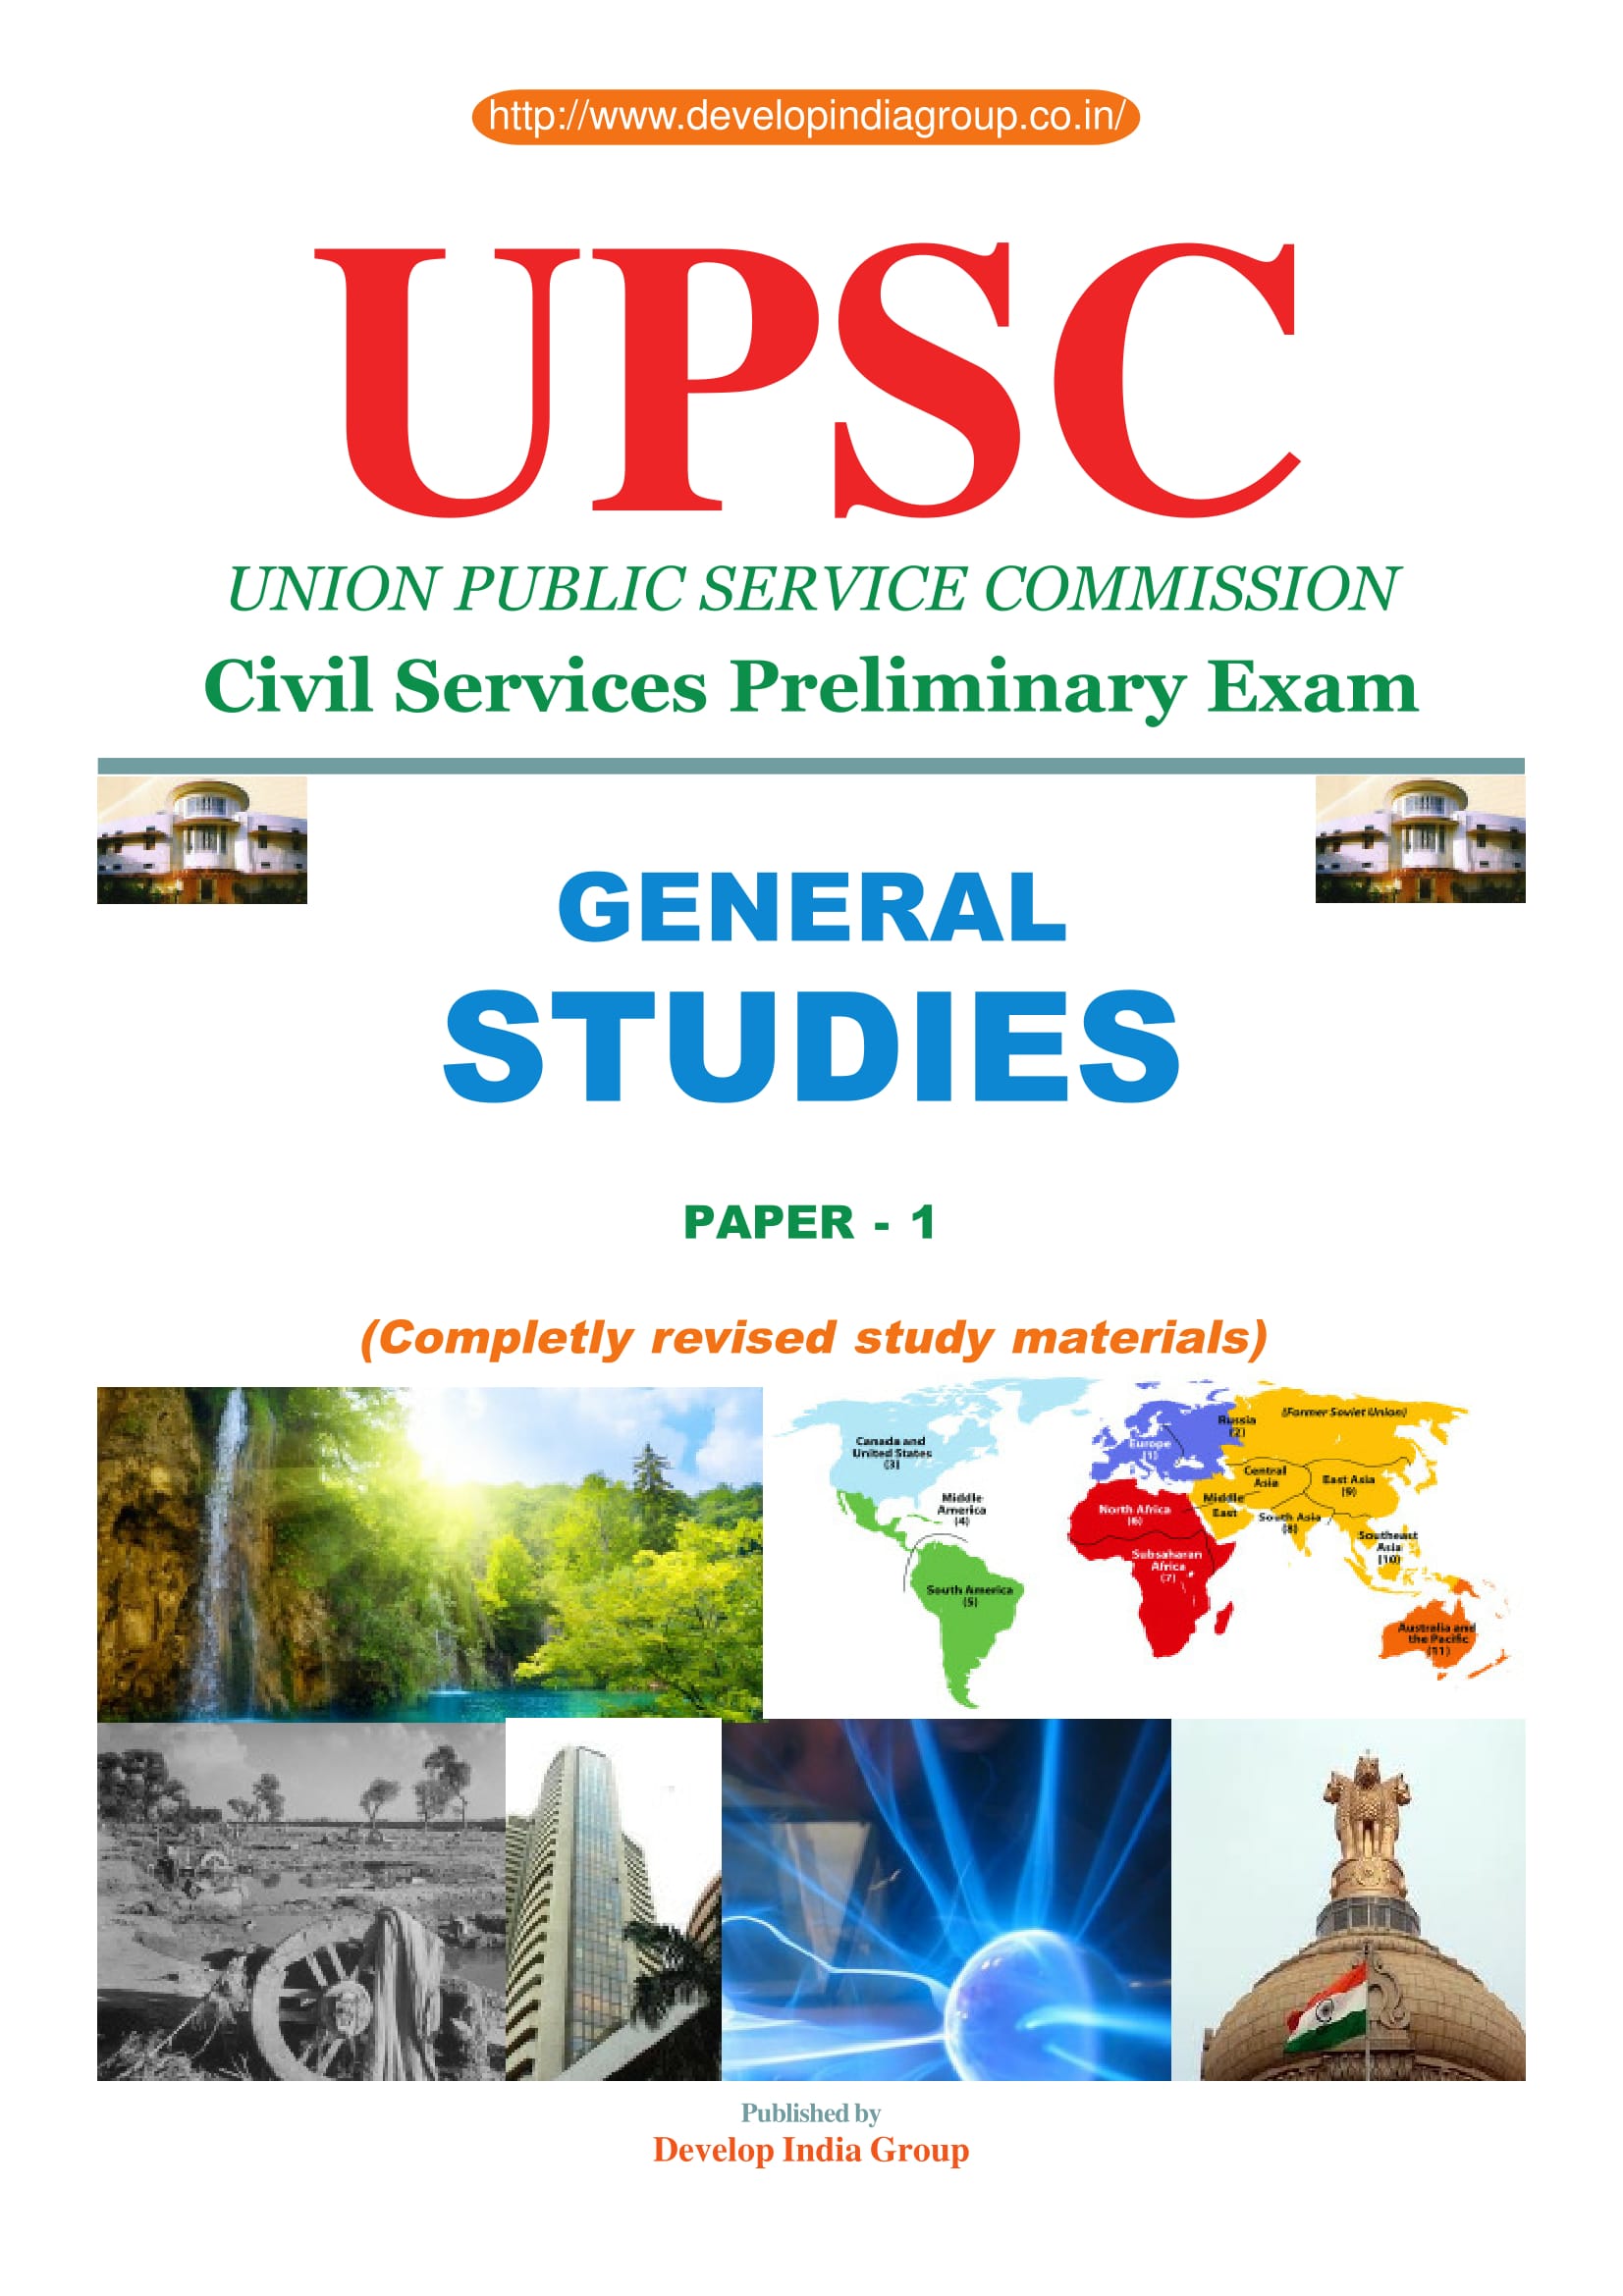 Civil Services Prelims Exam Paper I study notes (English)